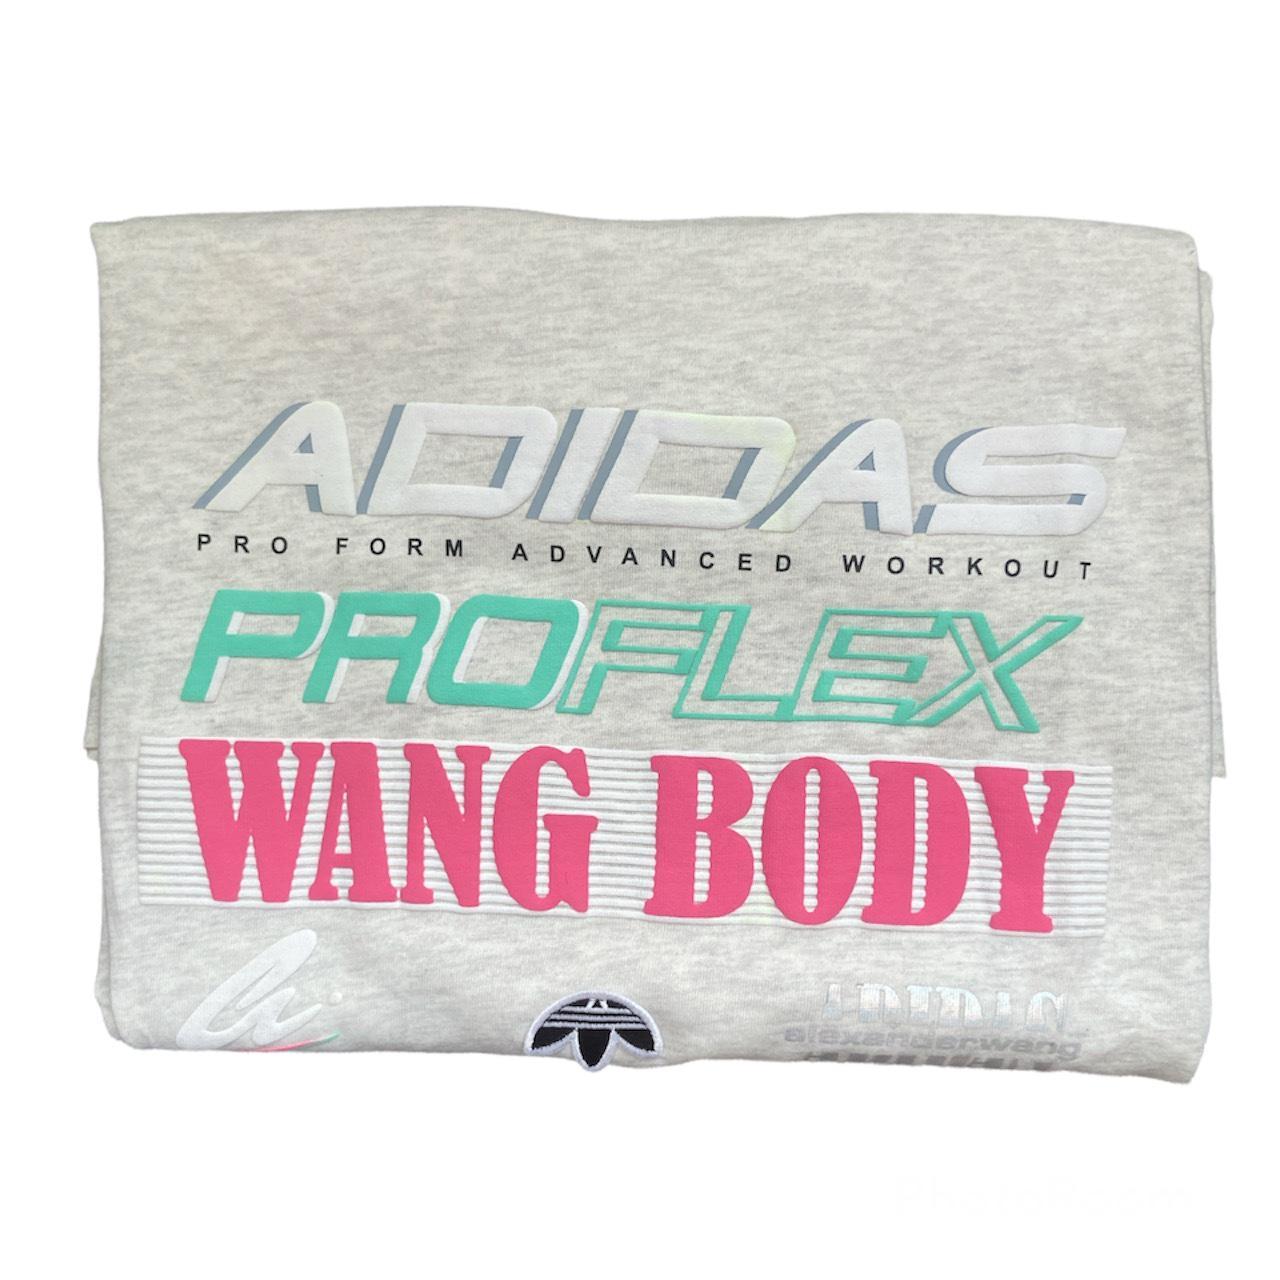 Product Image 2 - Alexander Wang Tee 

- shipped